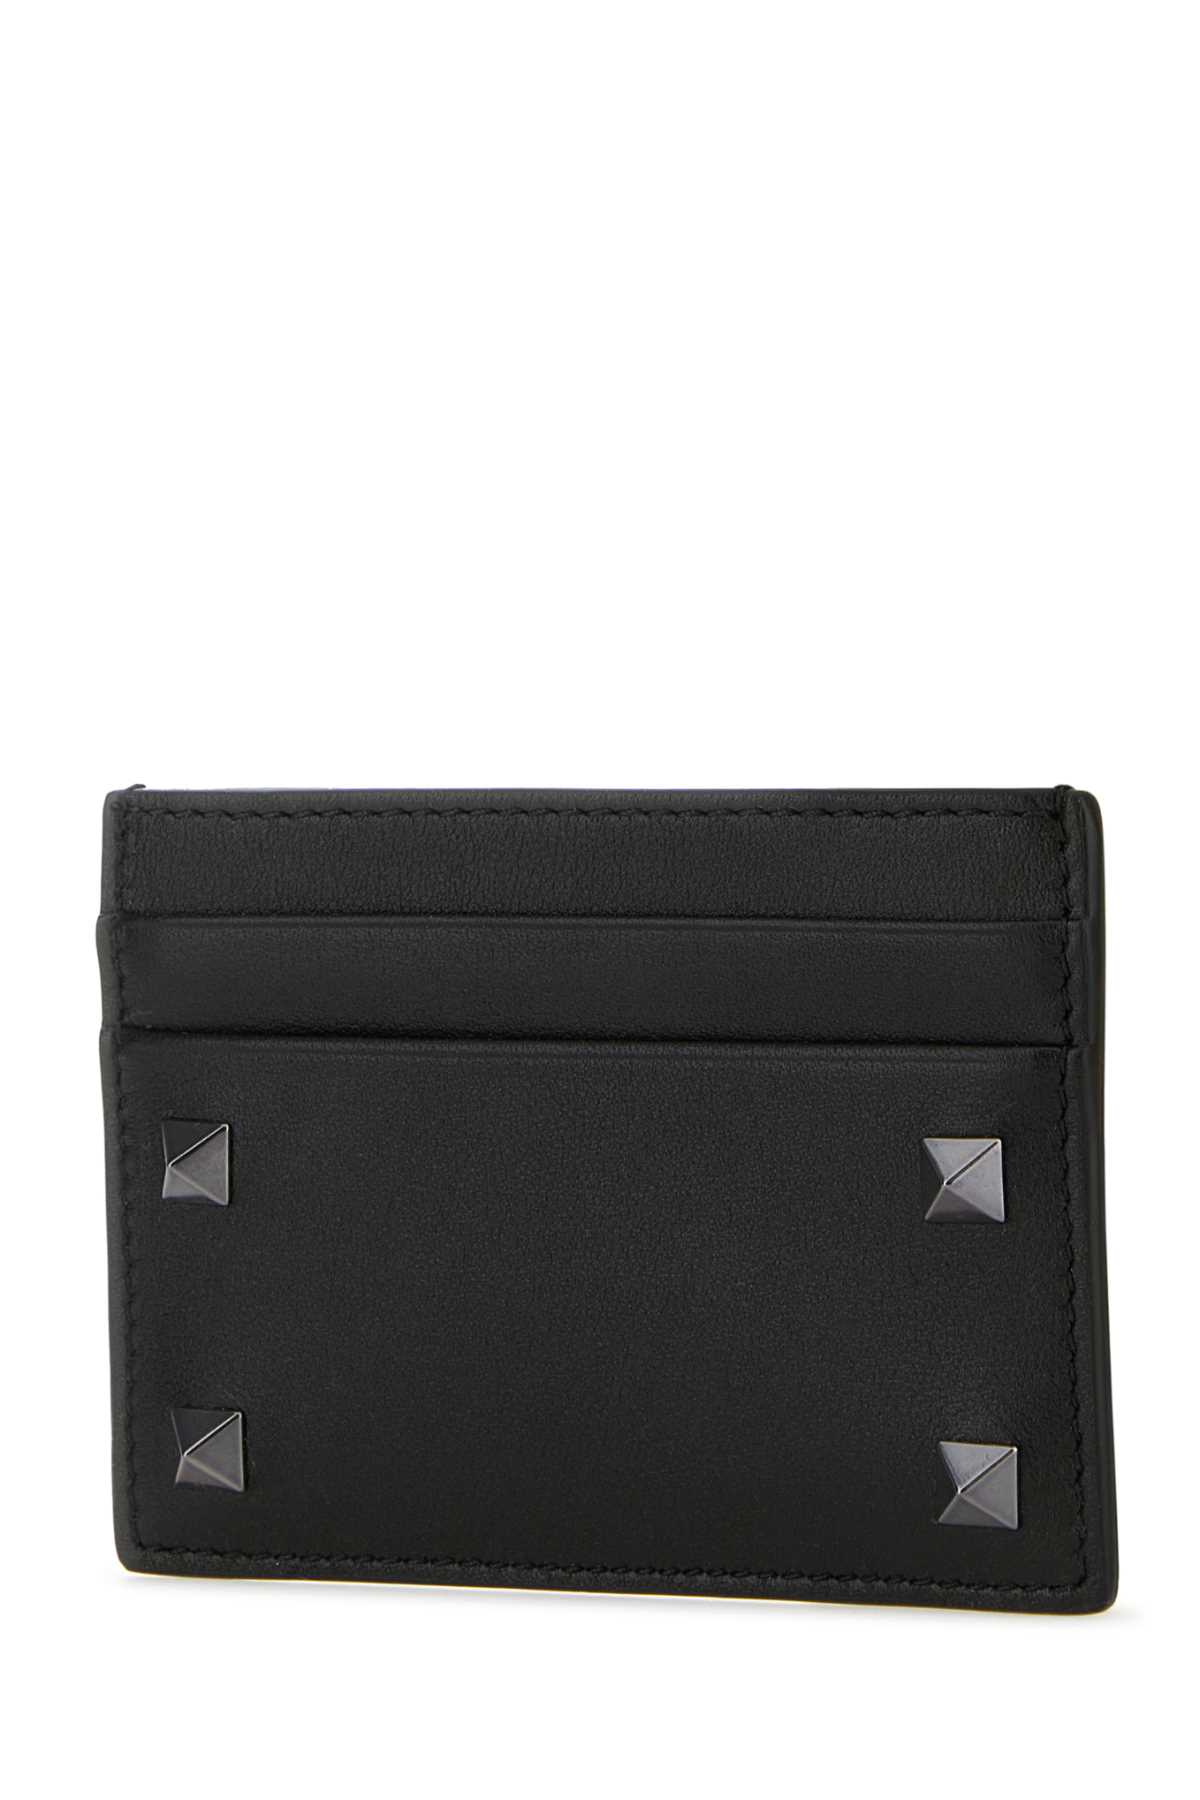 Valentino Garavani Black Leather Rockstud Card Holder In Nero